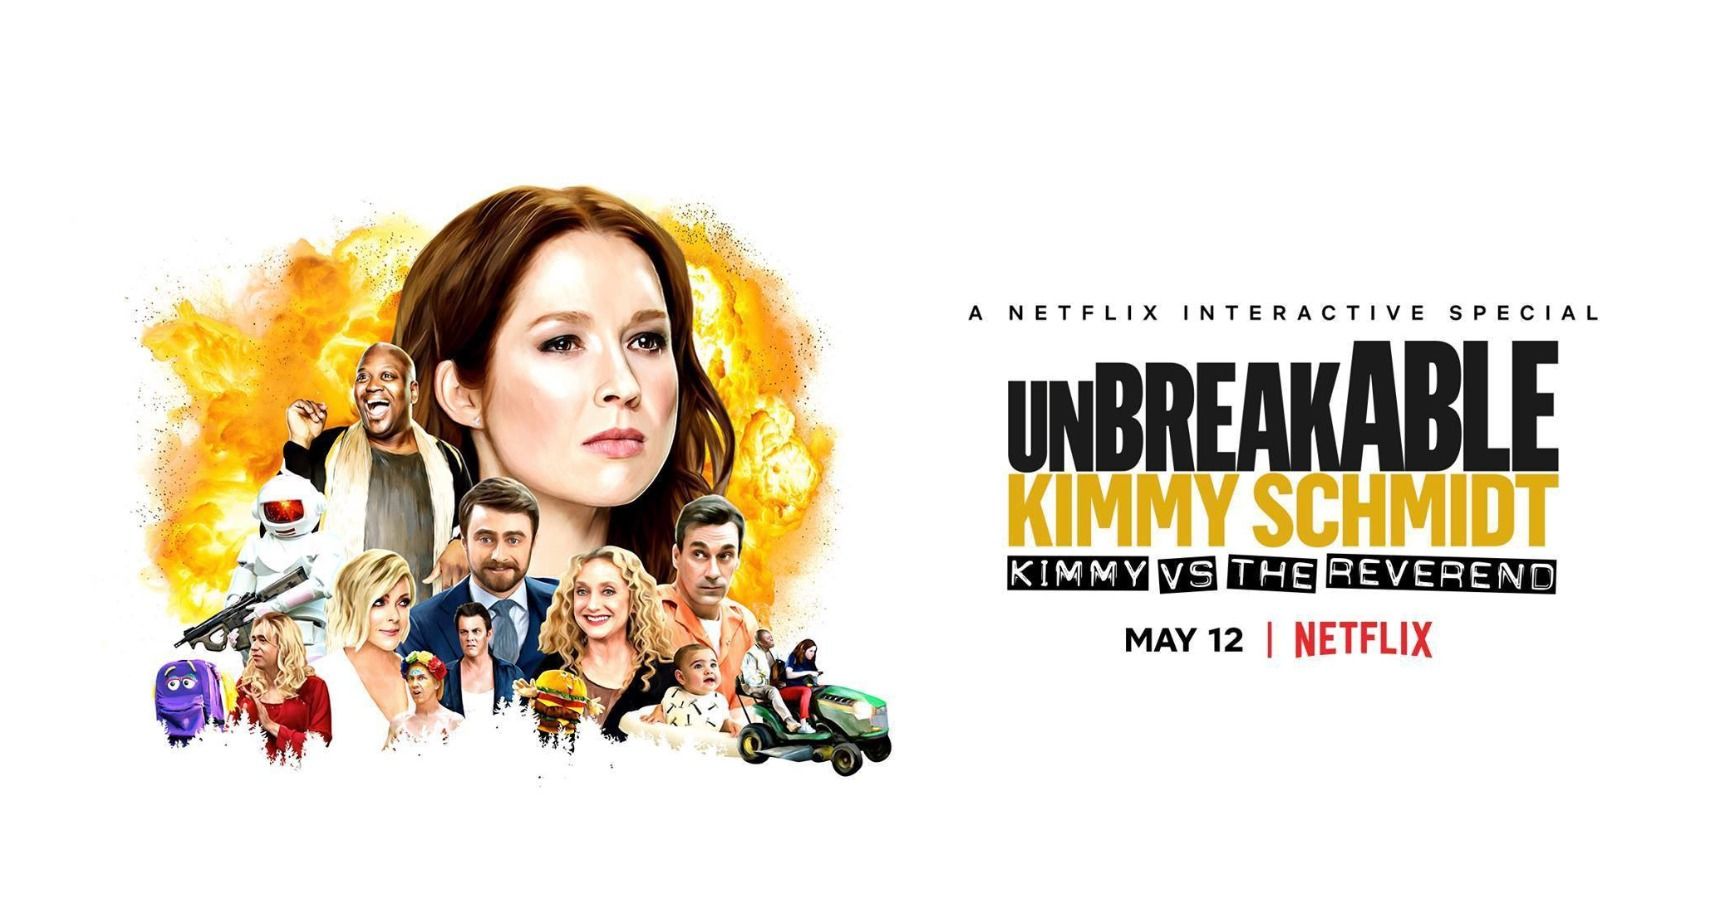 Netflix 10 Hidden Details In Unbreakable Kimmy Schmidt Kimmy vs the Reverend Everyone Completely Missed